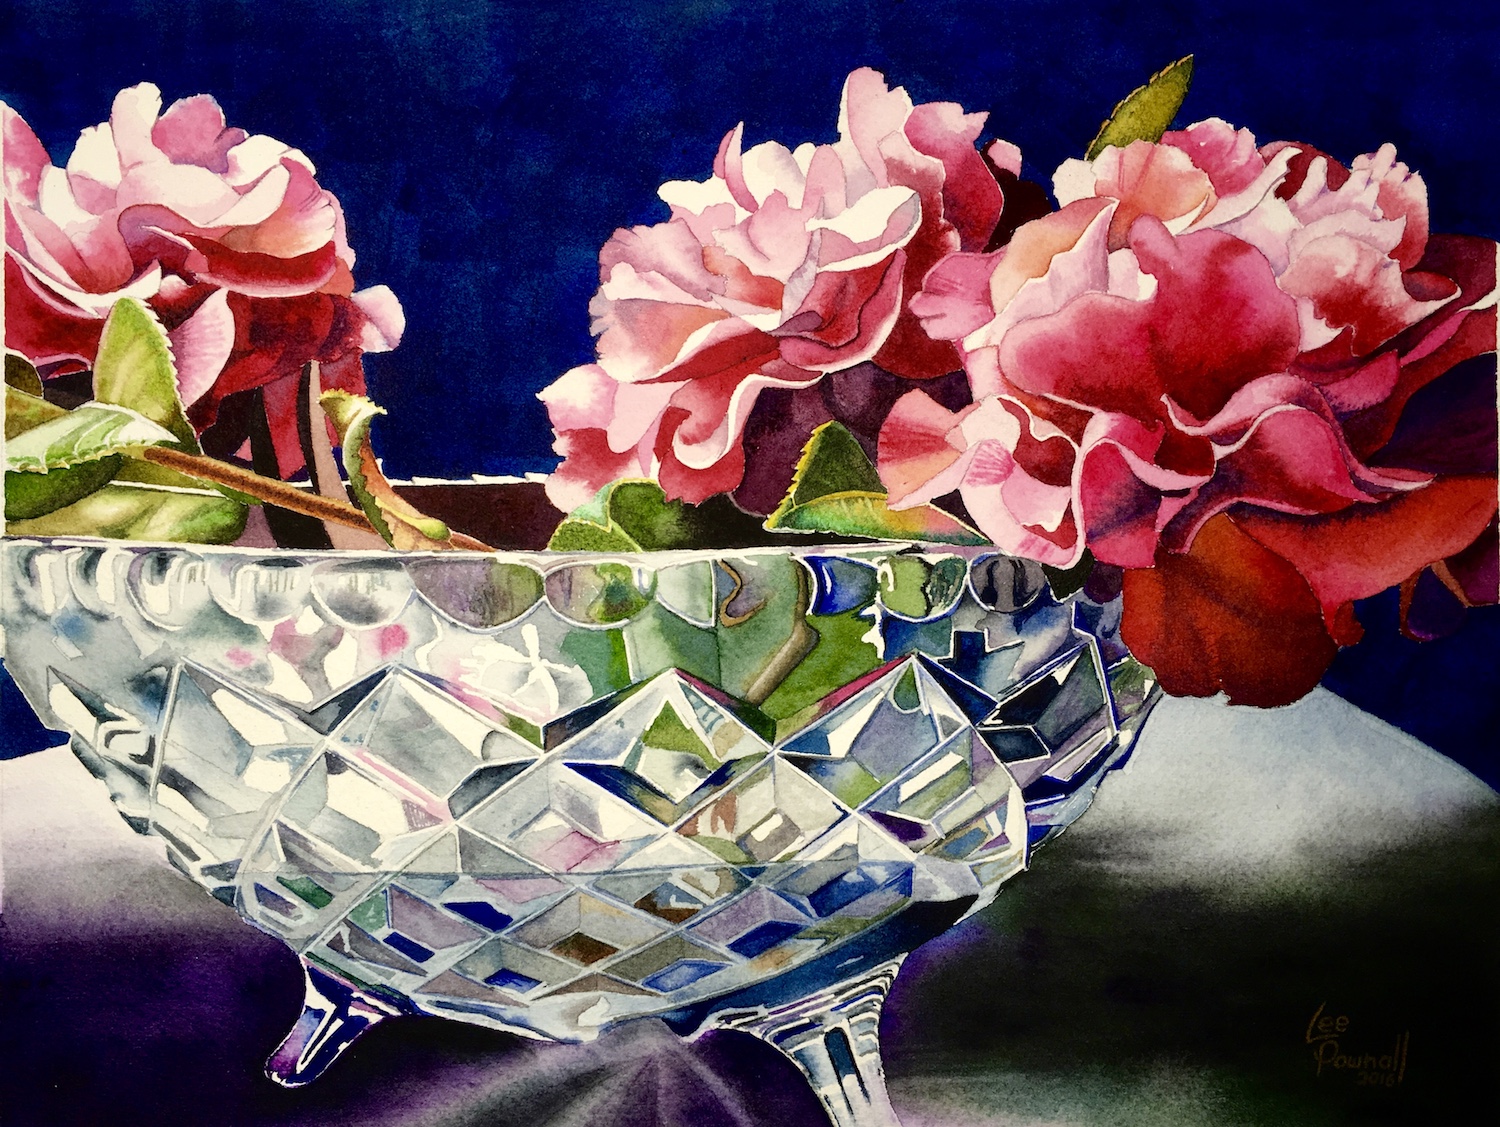 Watercolour “Crystal Camelias” 22cm x 28cm